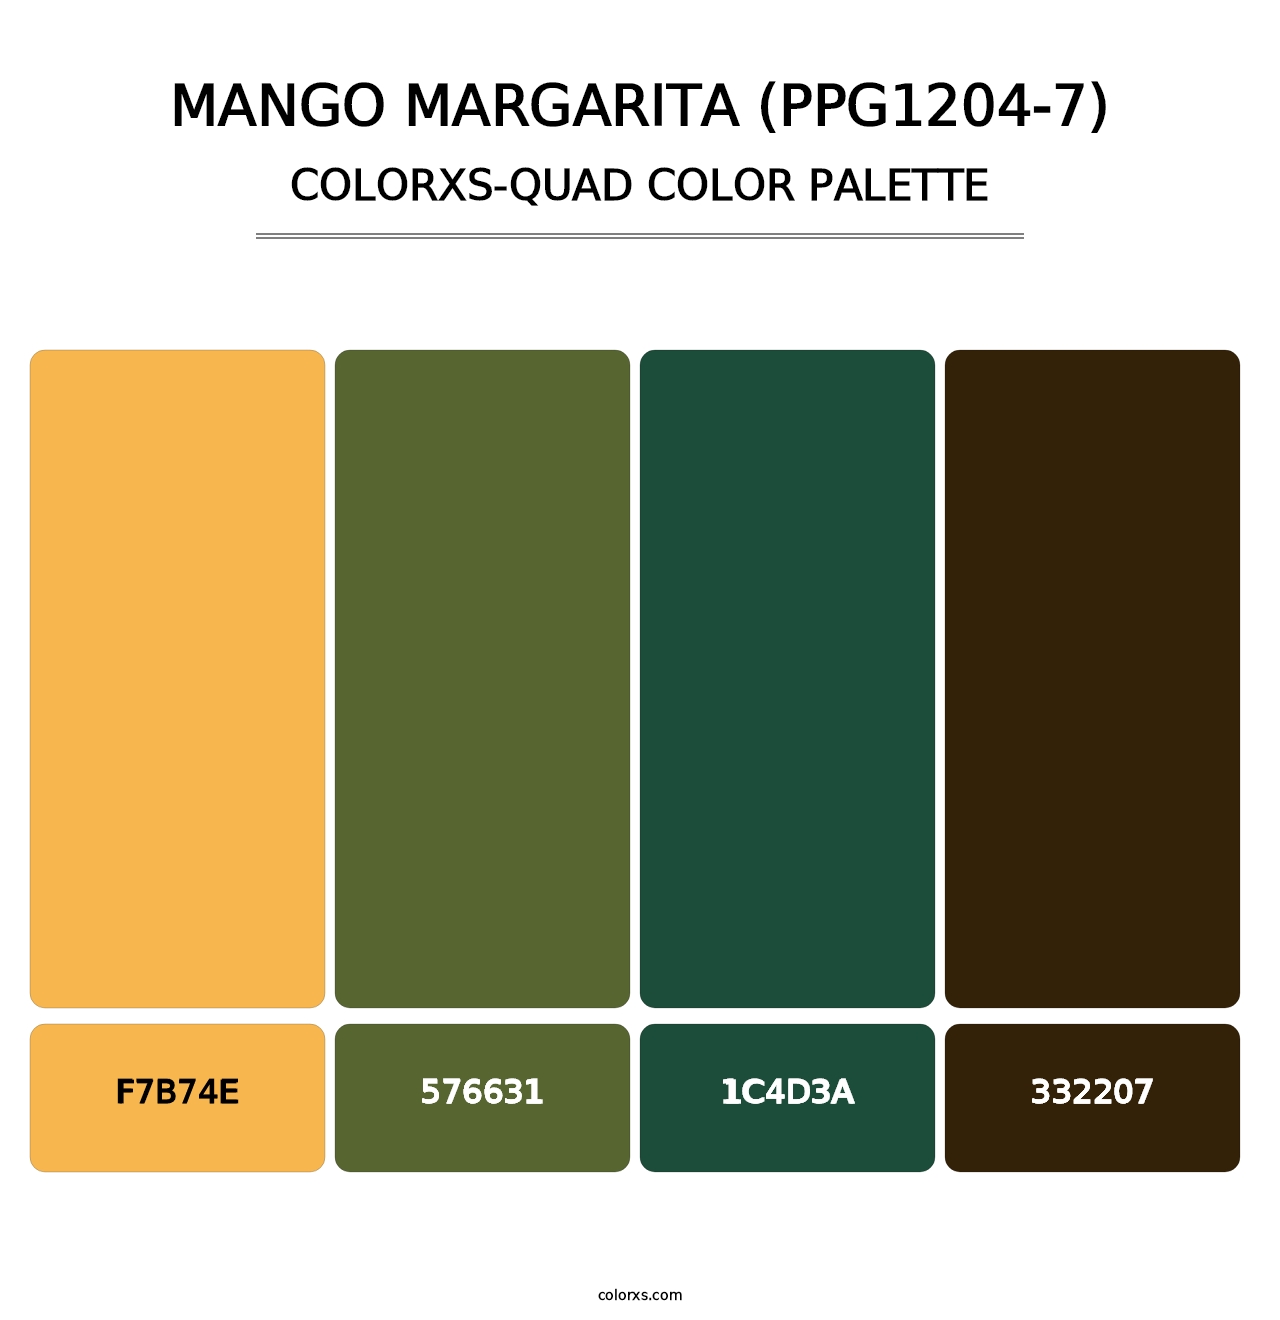 Mango Margarita (PPG1204-7) - Colorxs Quad Palette